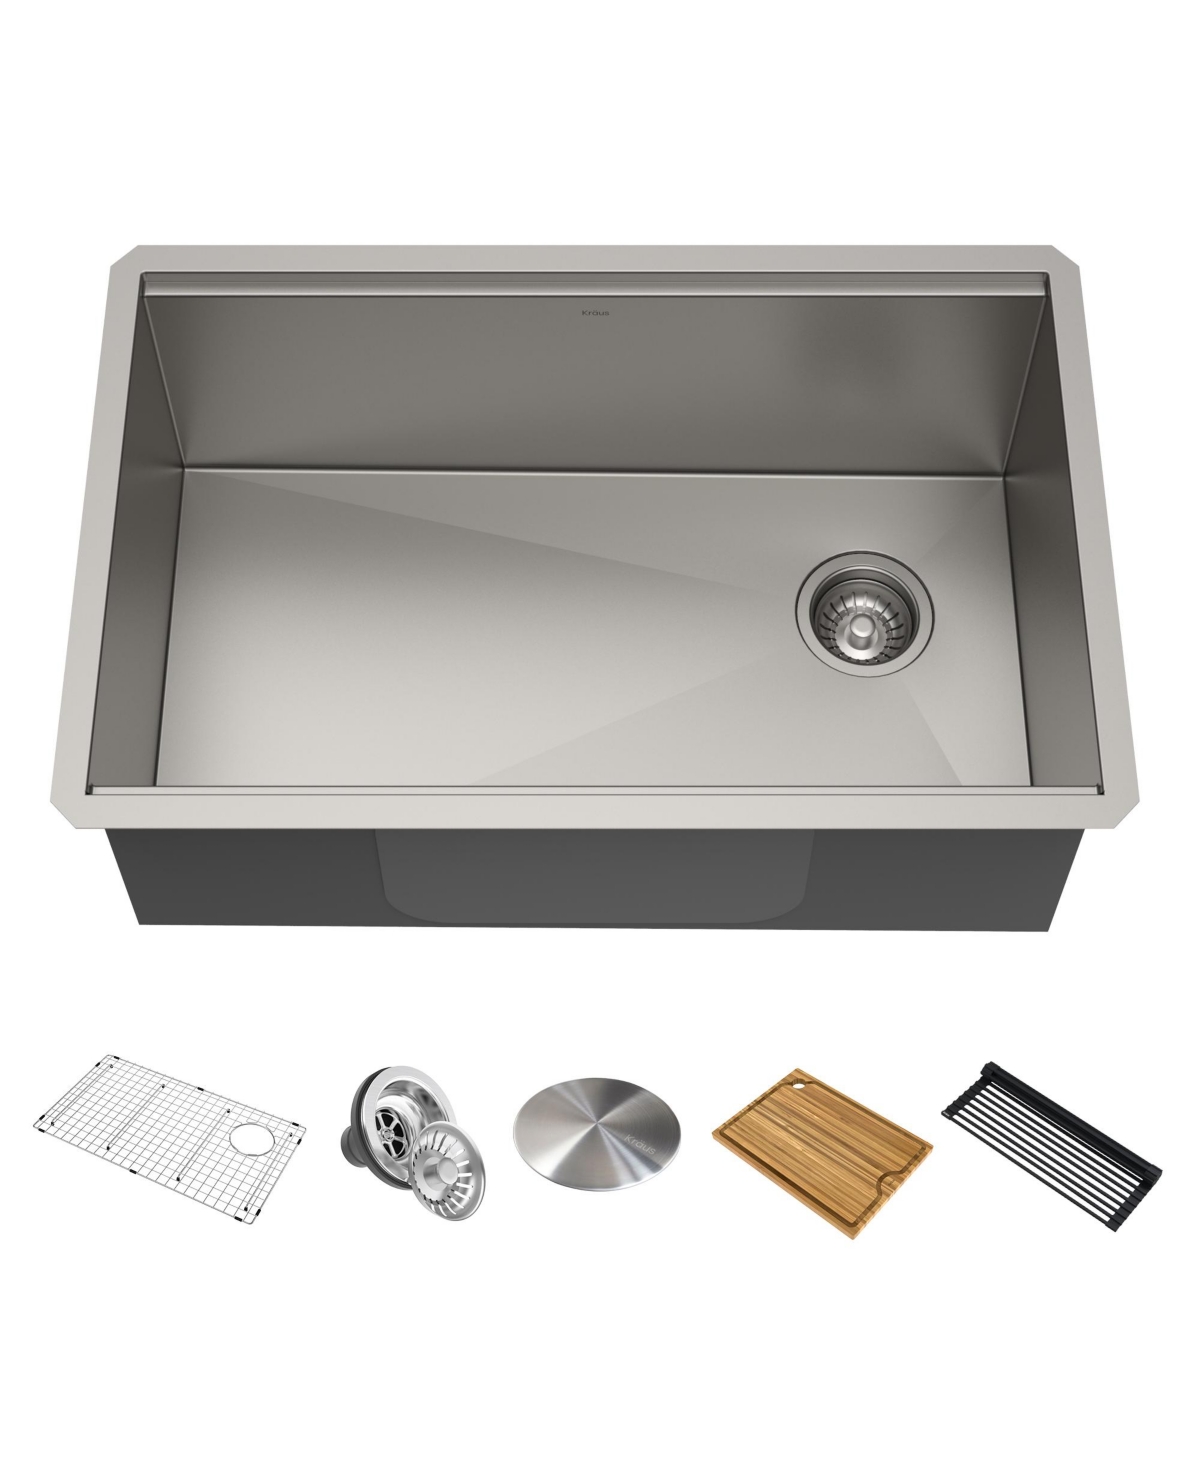 Kore 27 in. Workstation Undermount 16 Gauge Single Bowl Stainless Steel Kitchen Sink with Accessories - Stainless steel